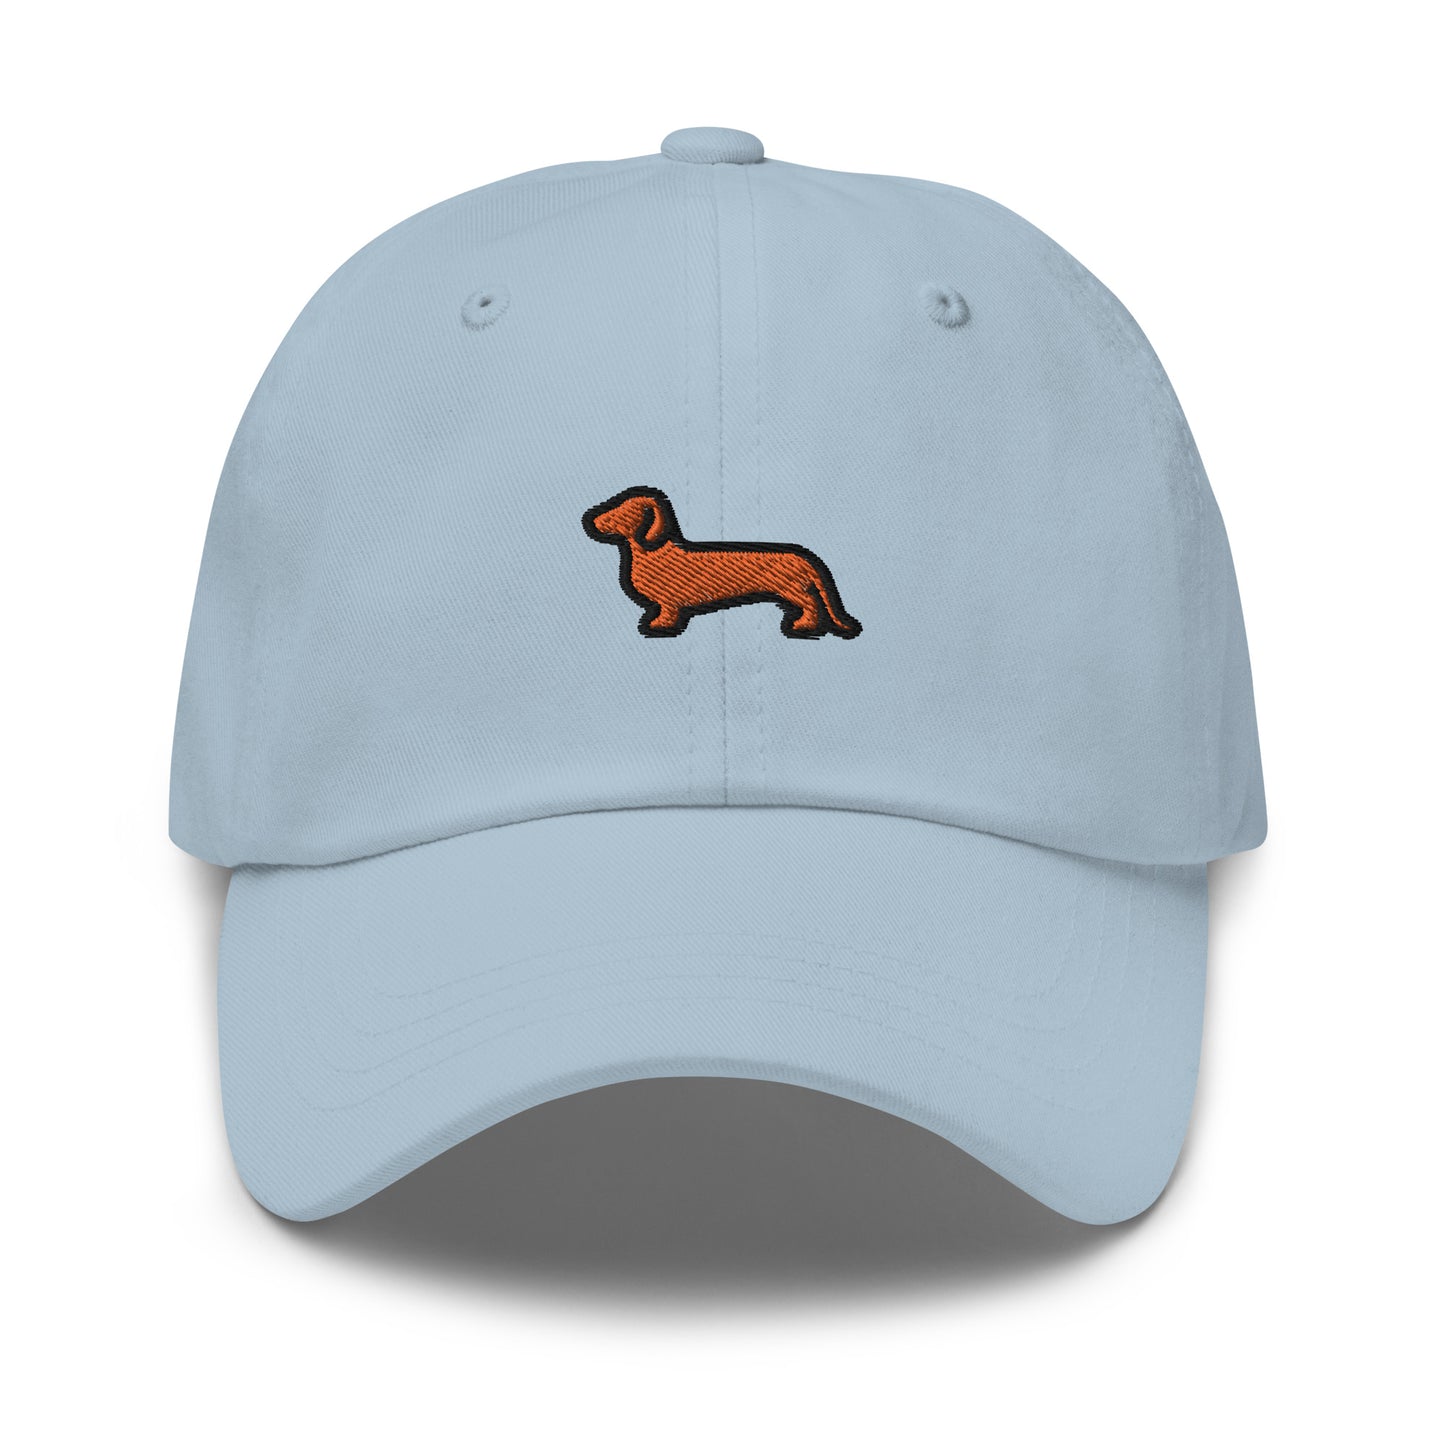 Dachshund Dog Embroidered Baseball Cap